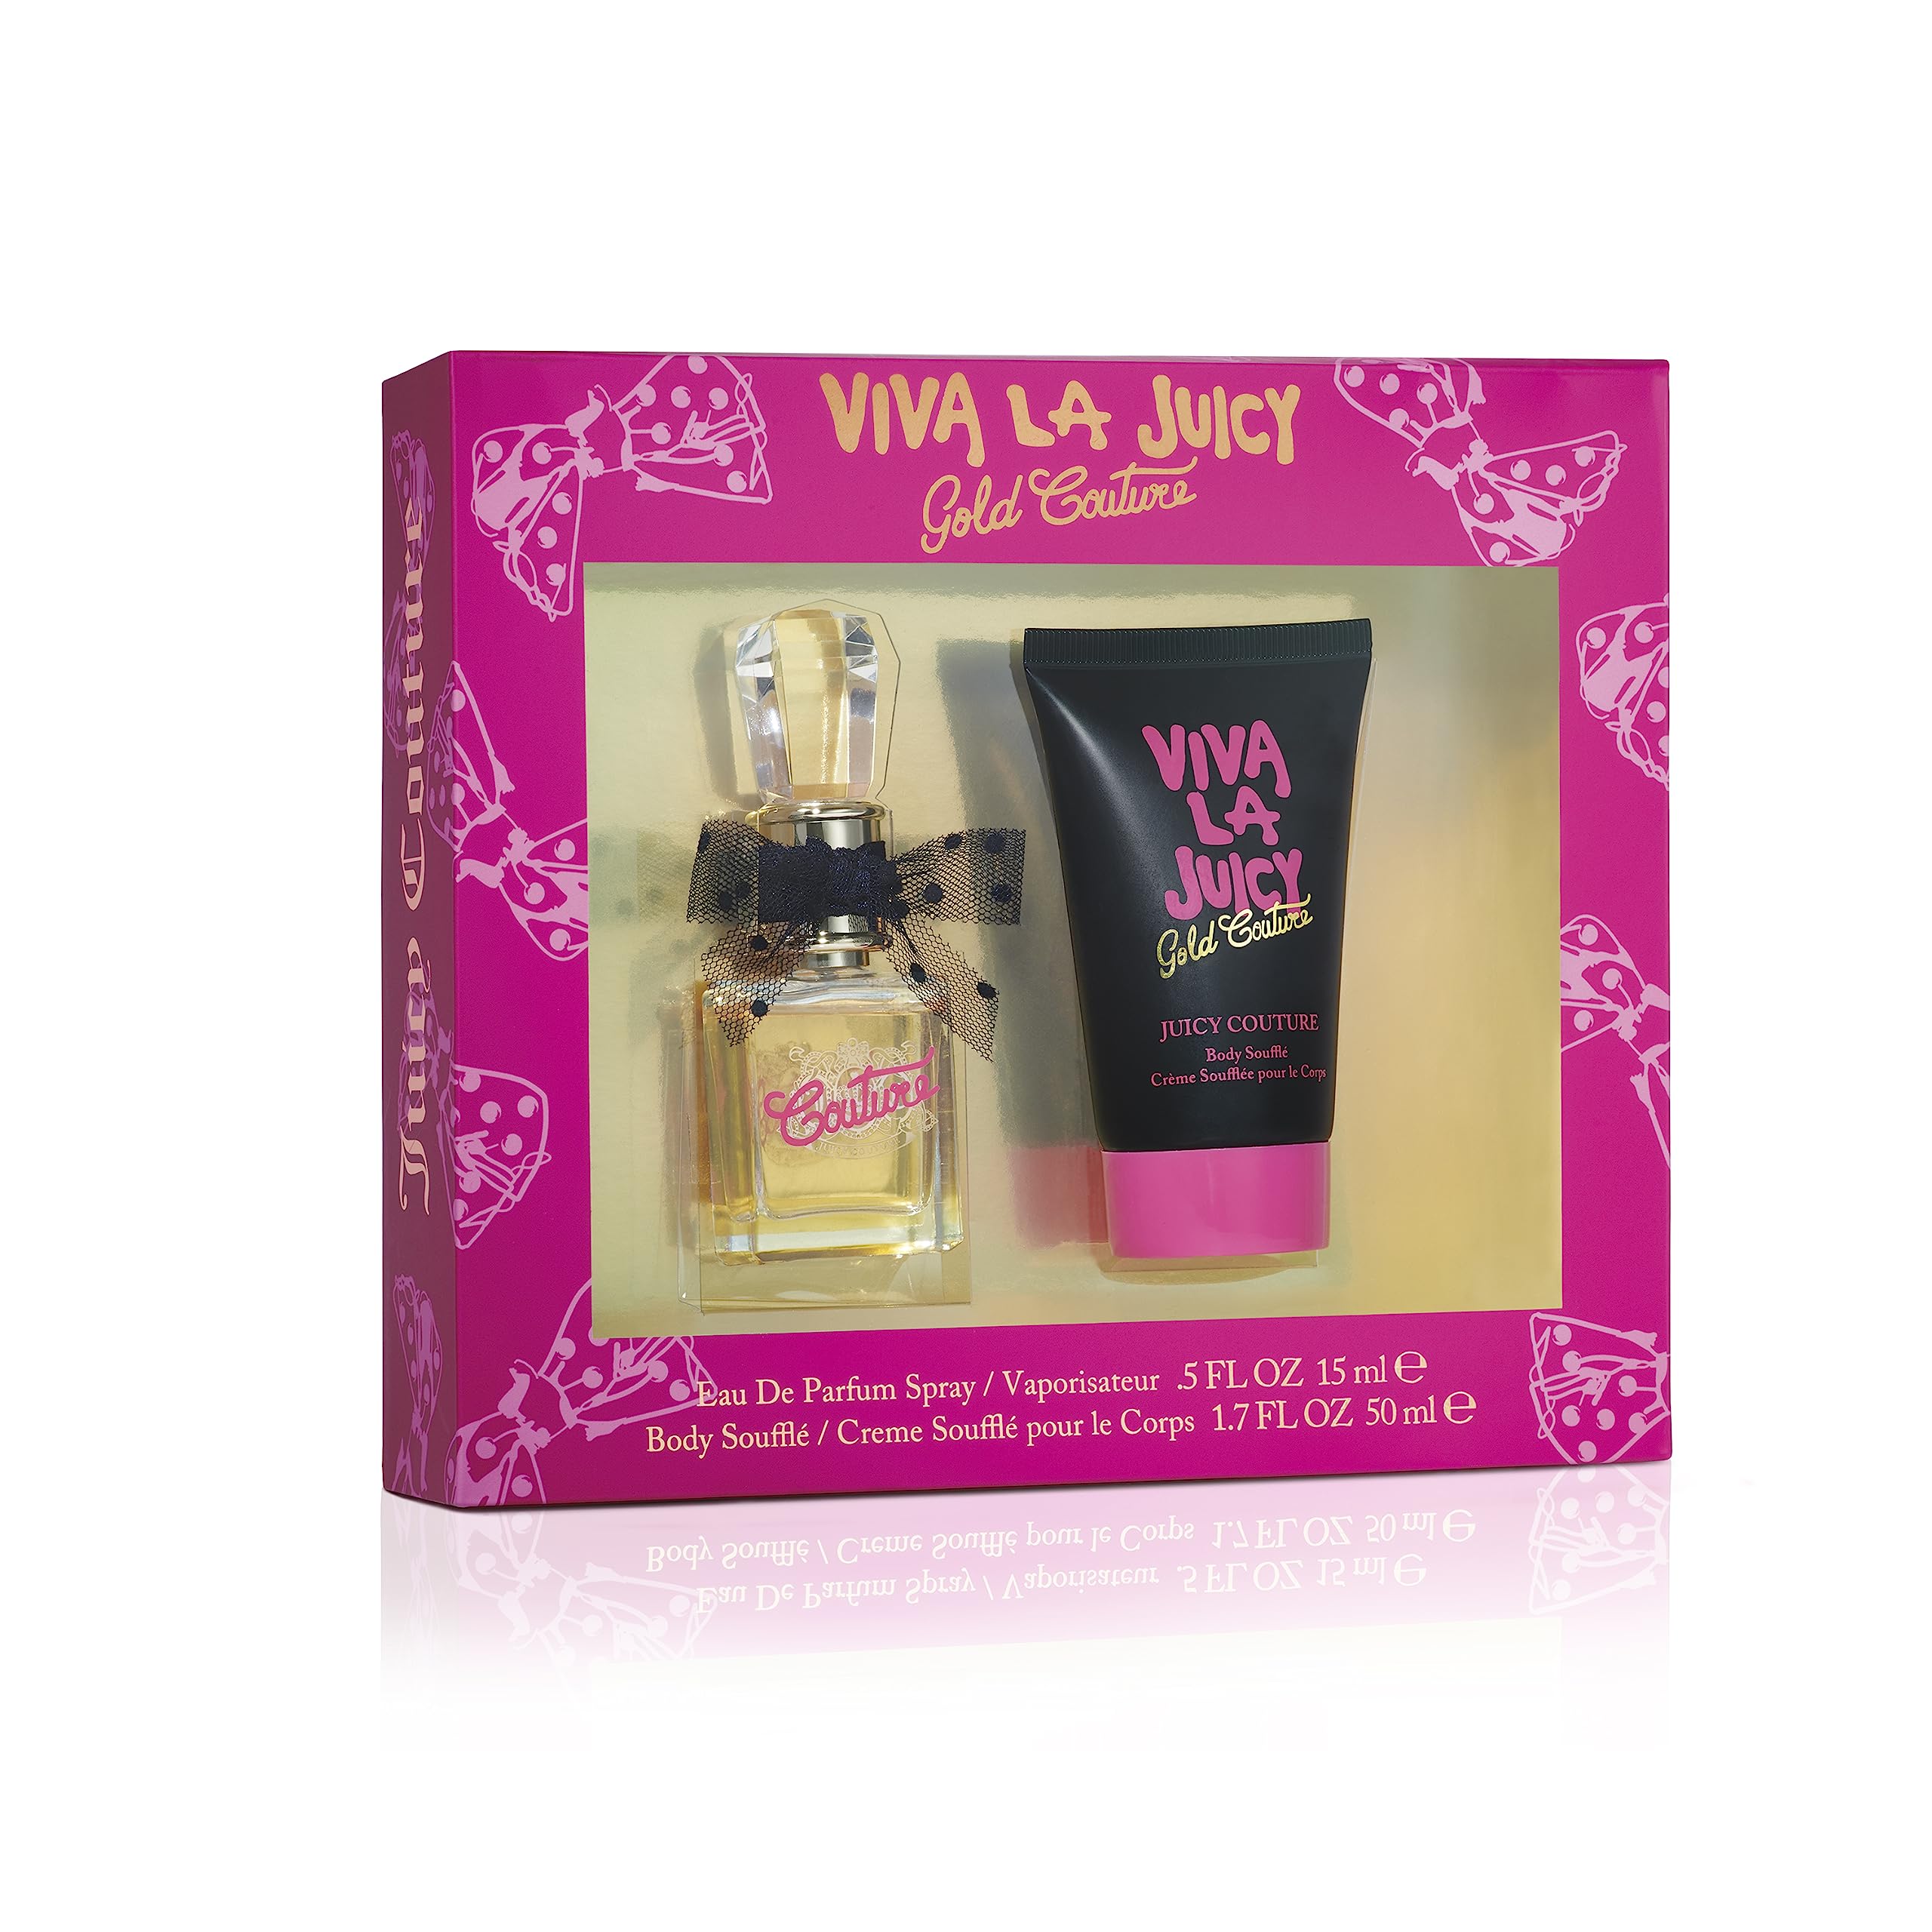 Juicy Couture, 2 Piece Fragrance Set Viva La Juicy Gold Eau De Parfum, Women's Perfume Set Includes EDP Spray Perfume & Body Lotion - Fruity & Sweet Travel Perfume & Travel Body Lotion for Women